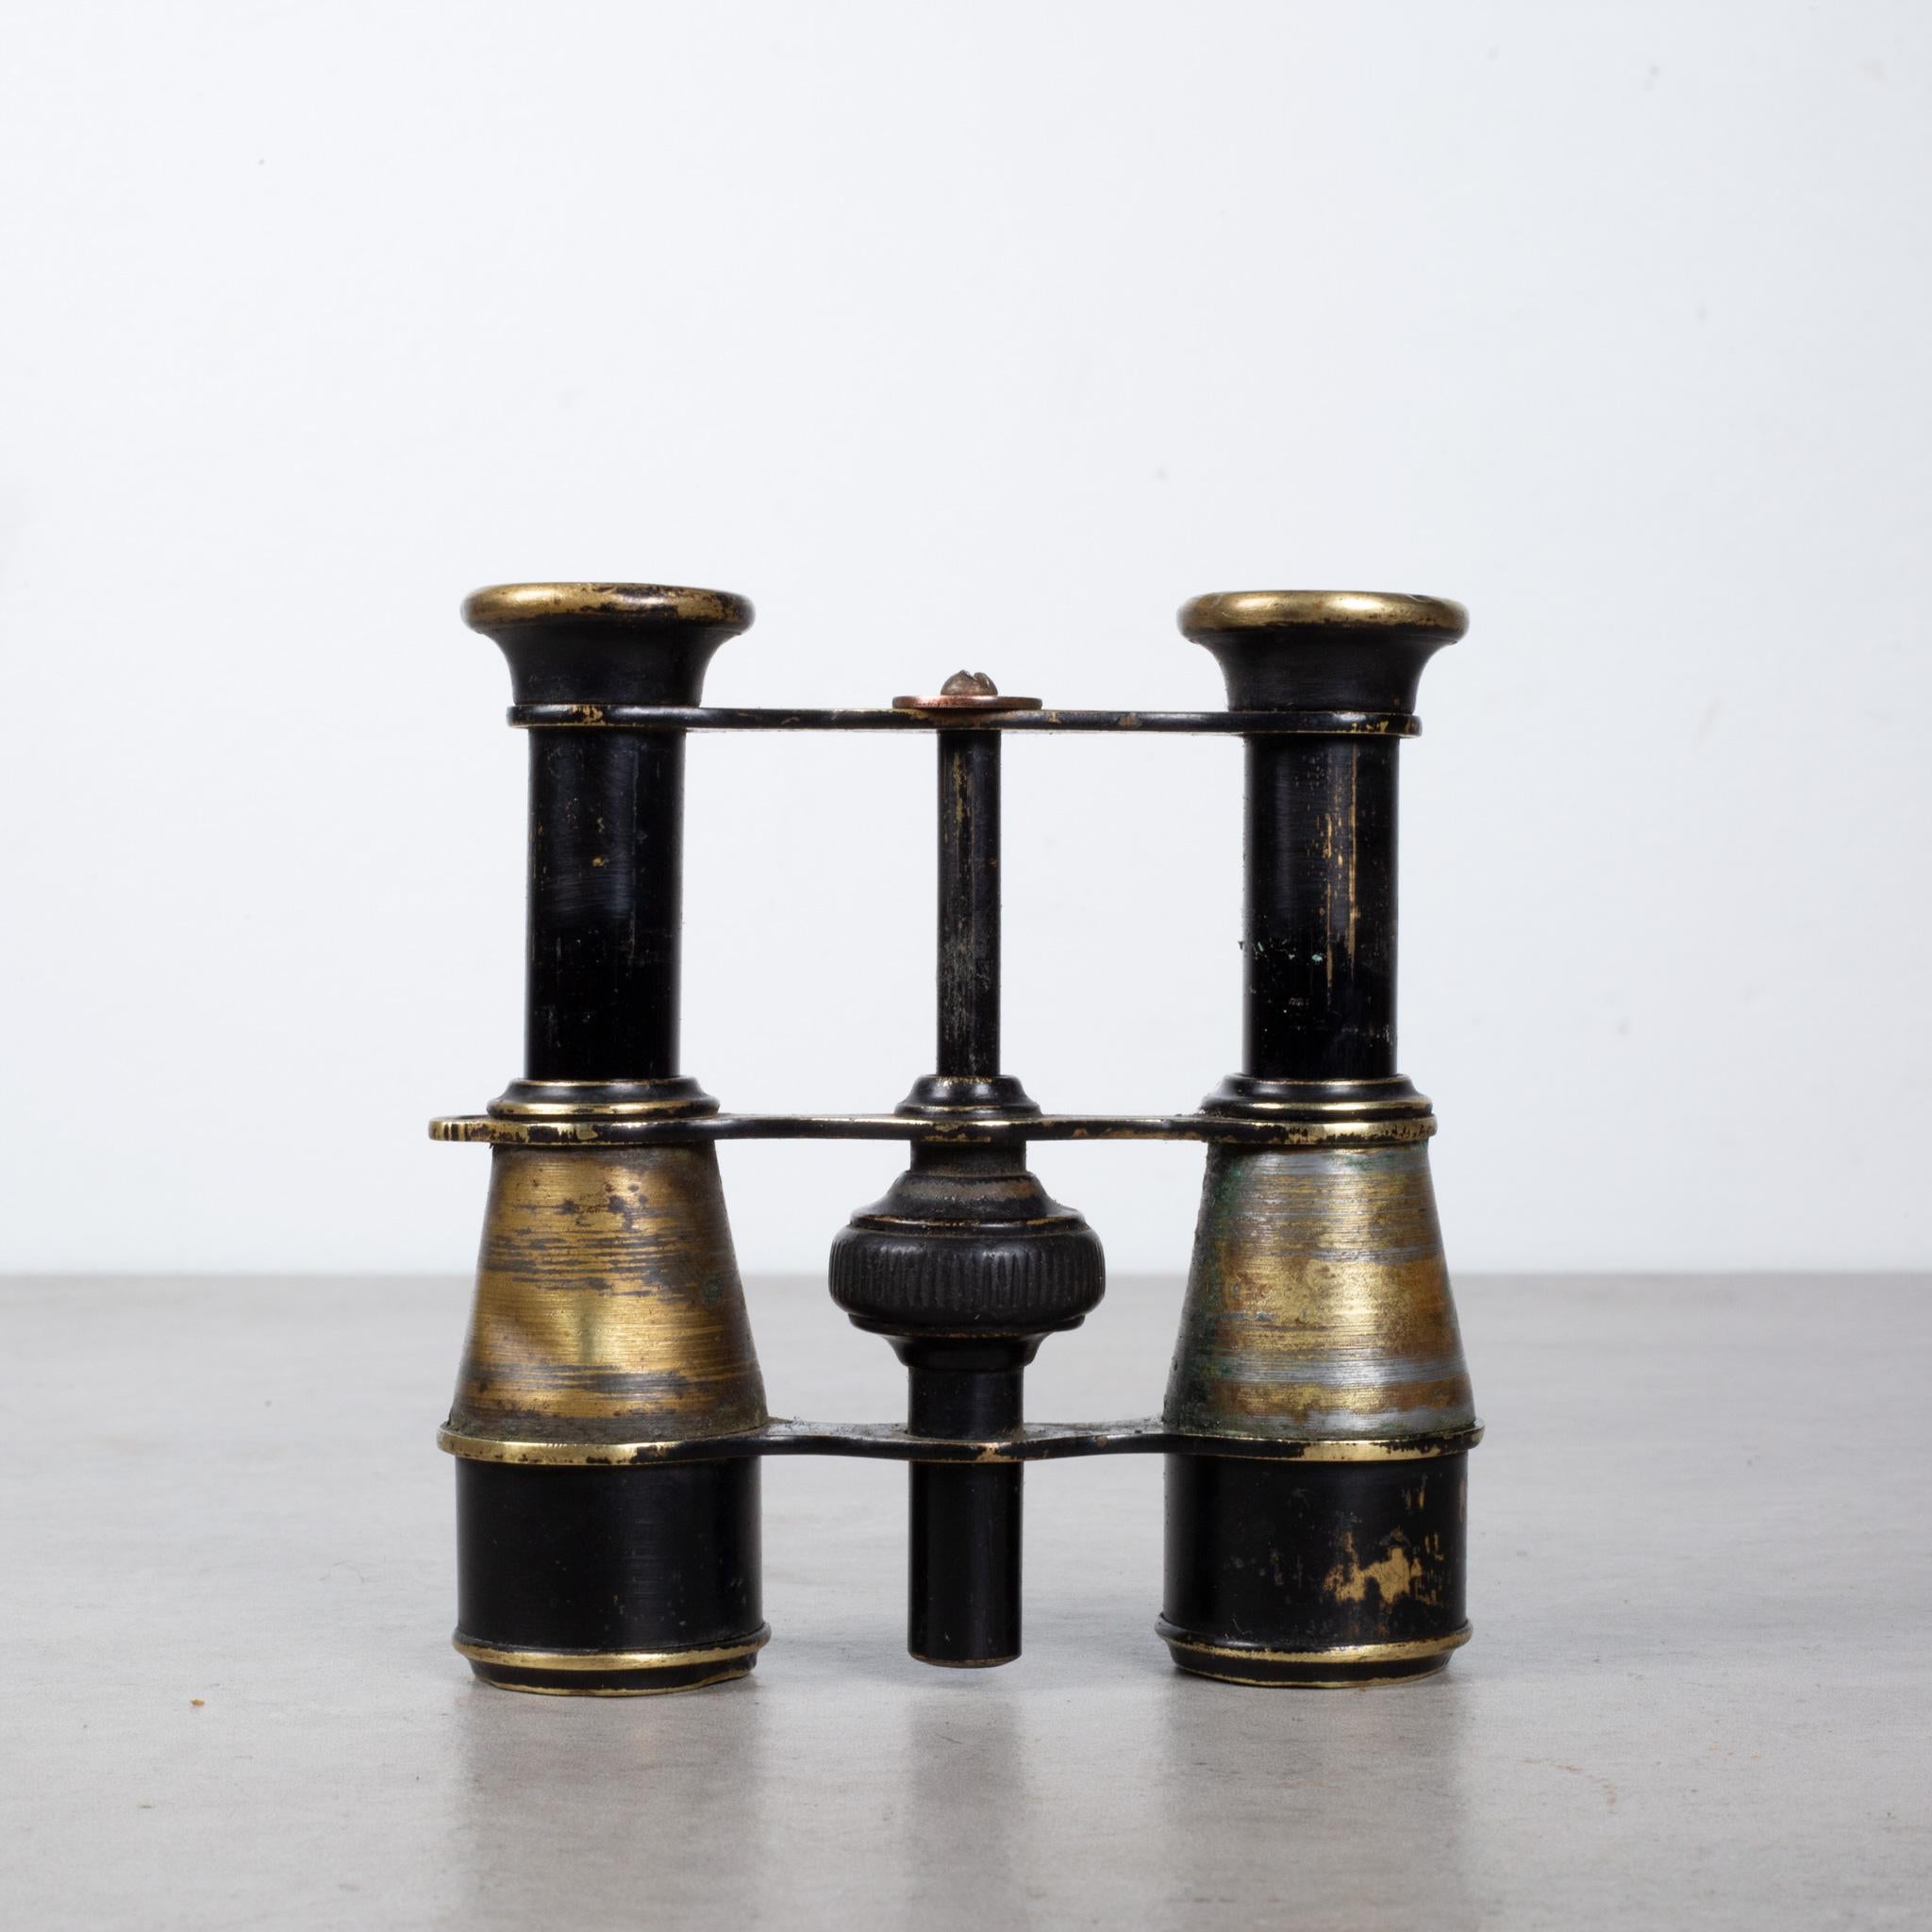 antique brass binoculars